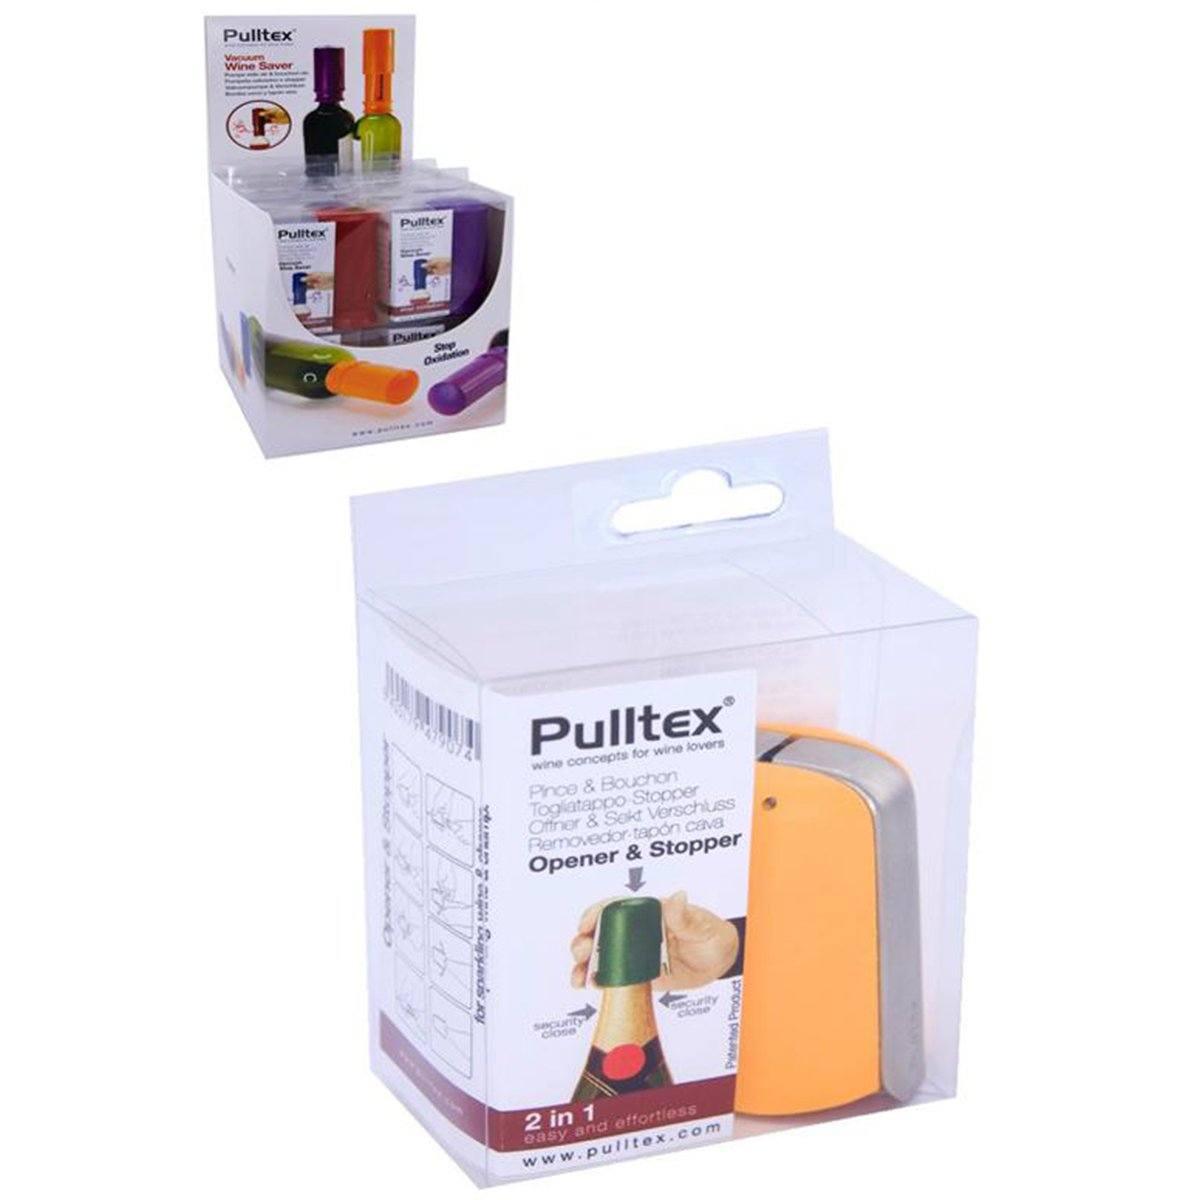 Pulltex "Basics" Champagne Stopper (10792510) - Stopper - GDV Fine Wines® - Accessories Product, Pulltex, Spain, Stopper